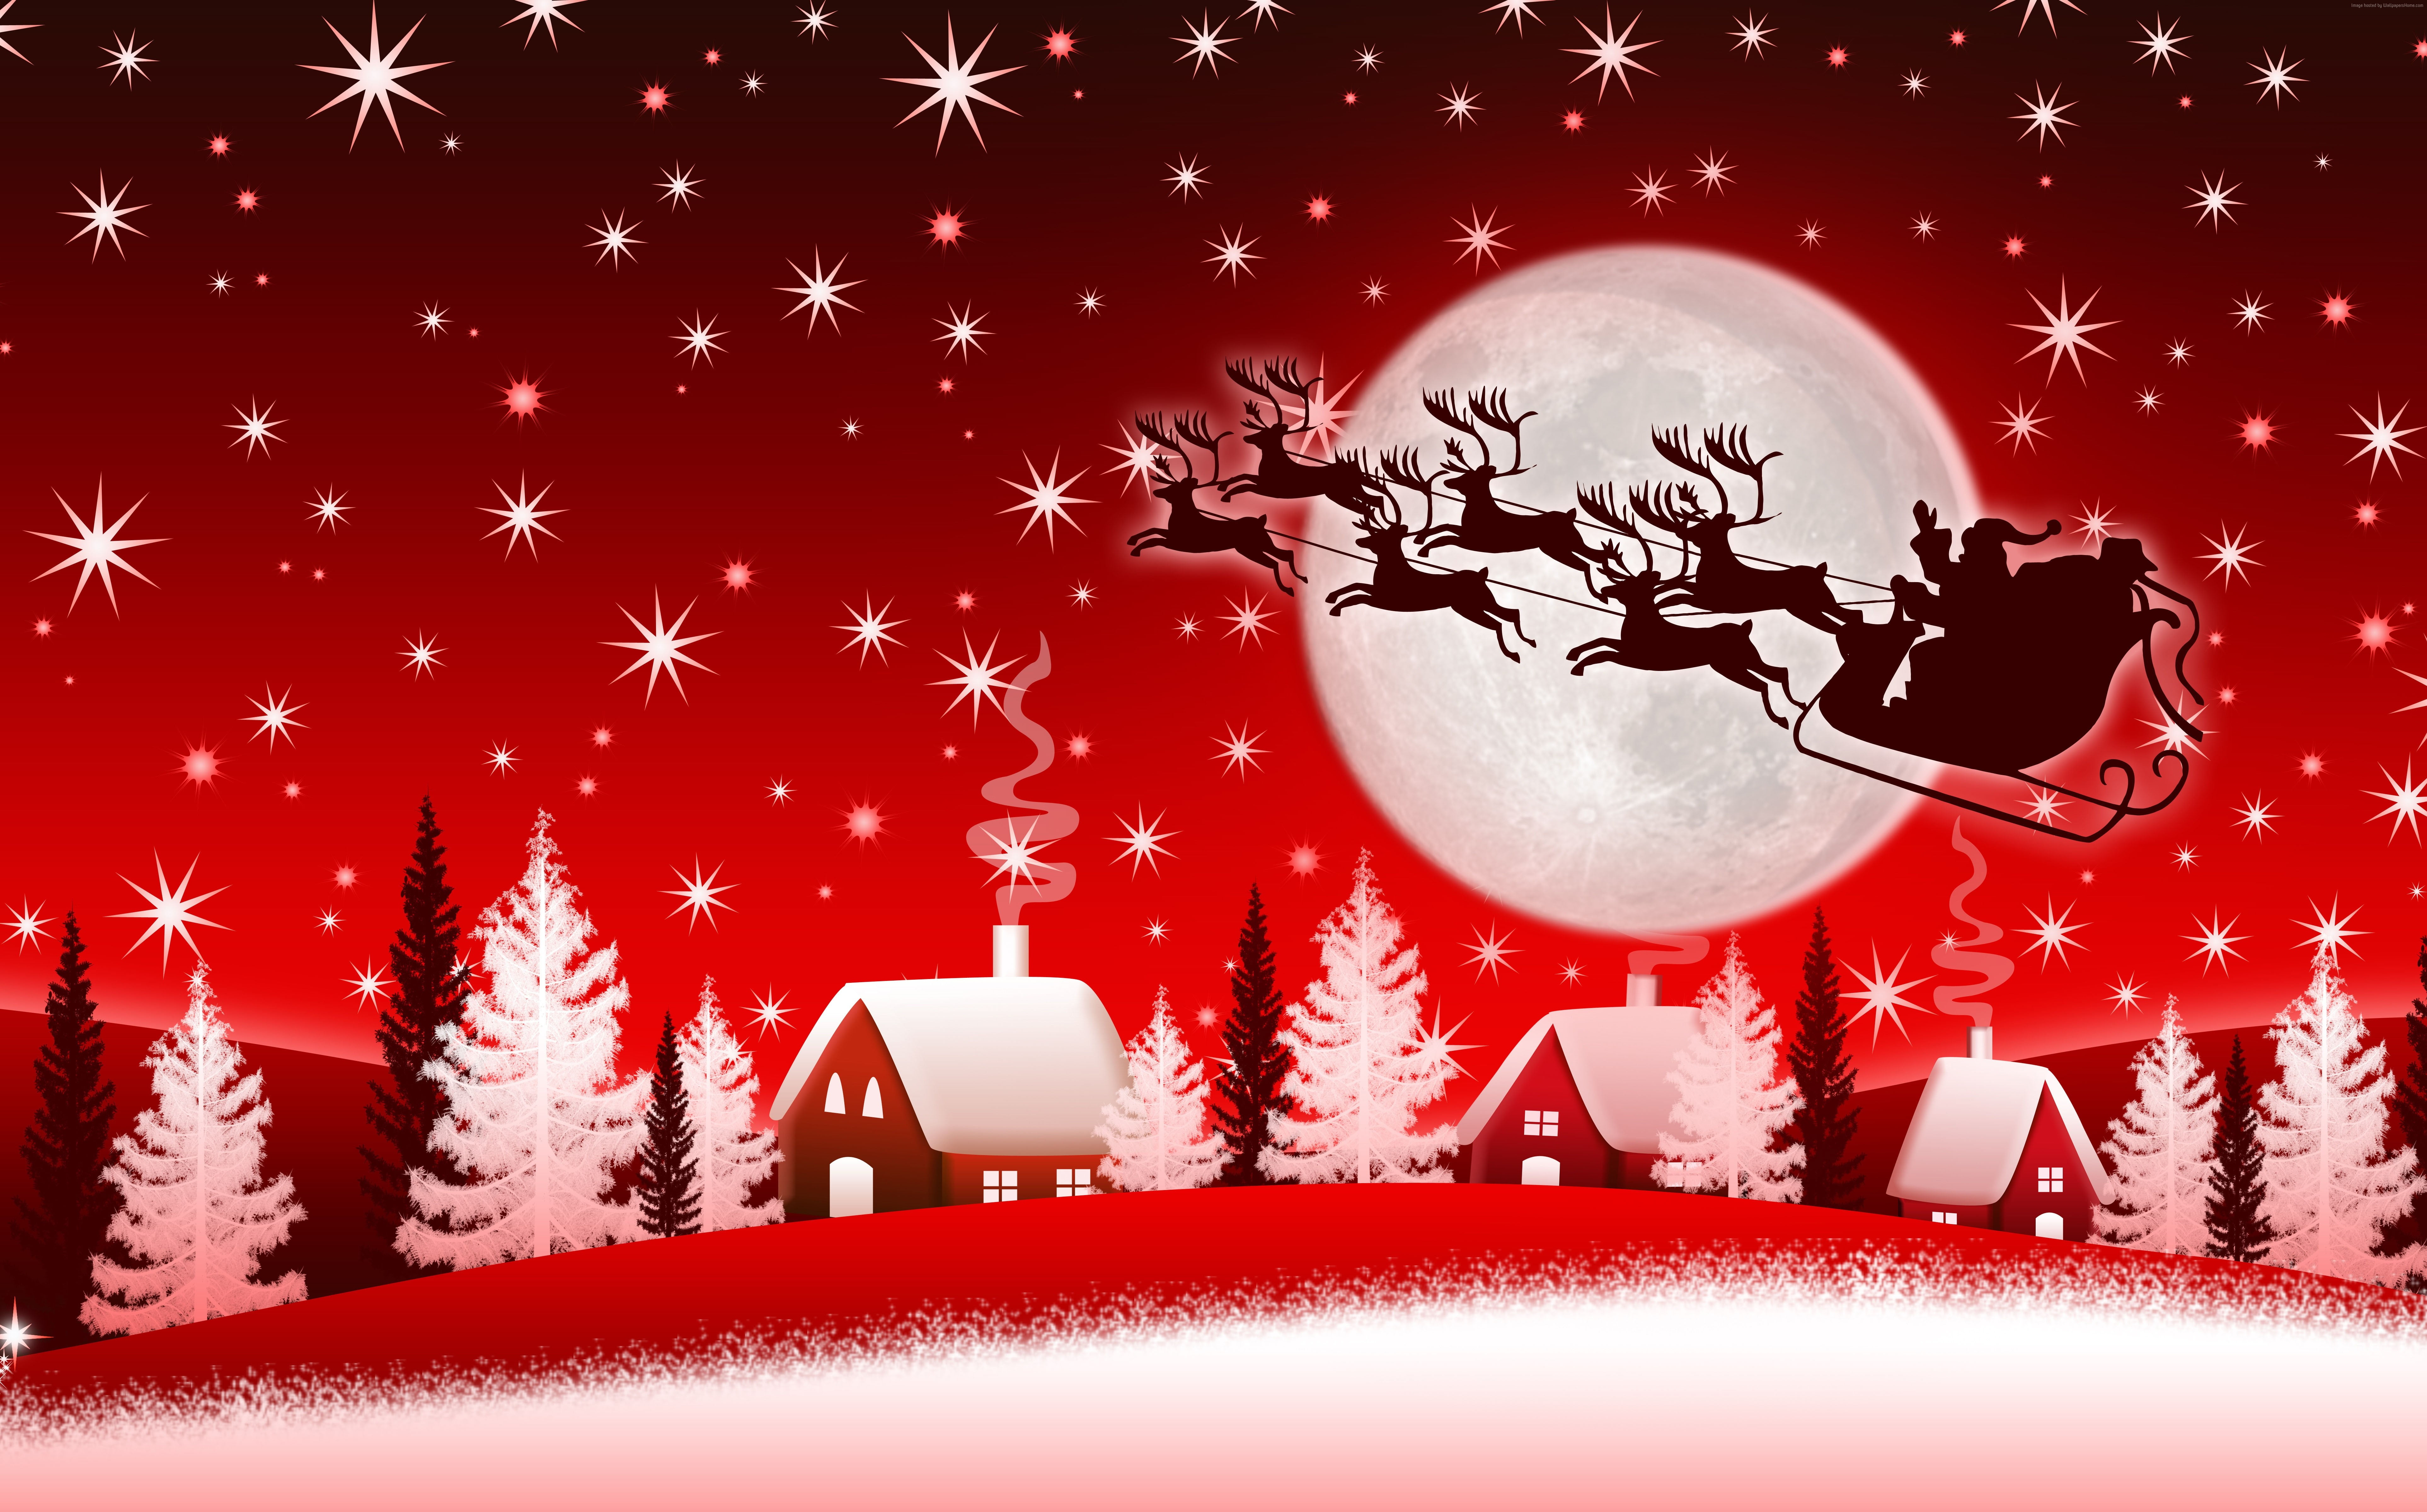 Christmas Reindeer Presents iPhone Wallpapers Free Download